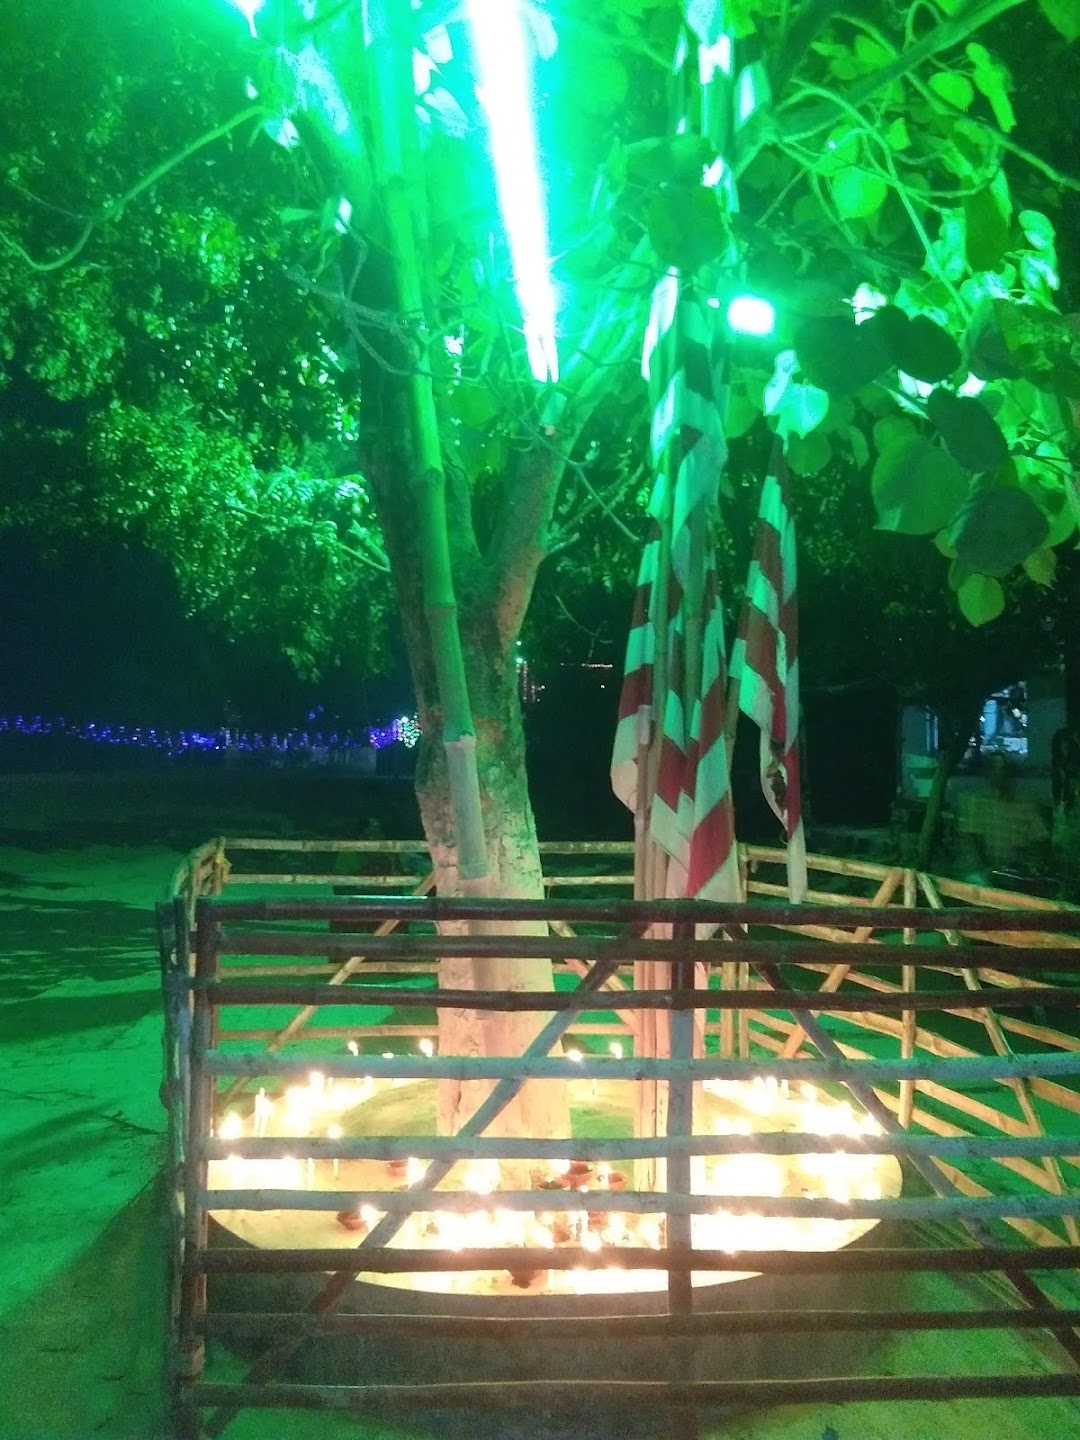 Adibasi Para Sarna Sthal (आदिवासी पाड़ा सरना स्थल)